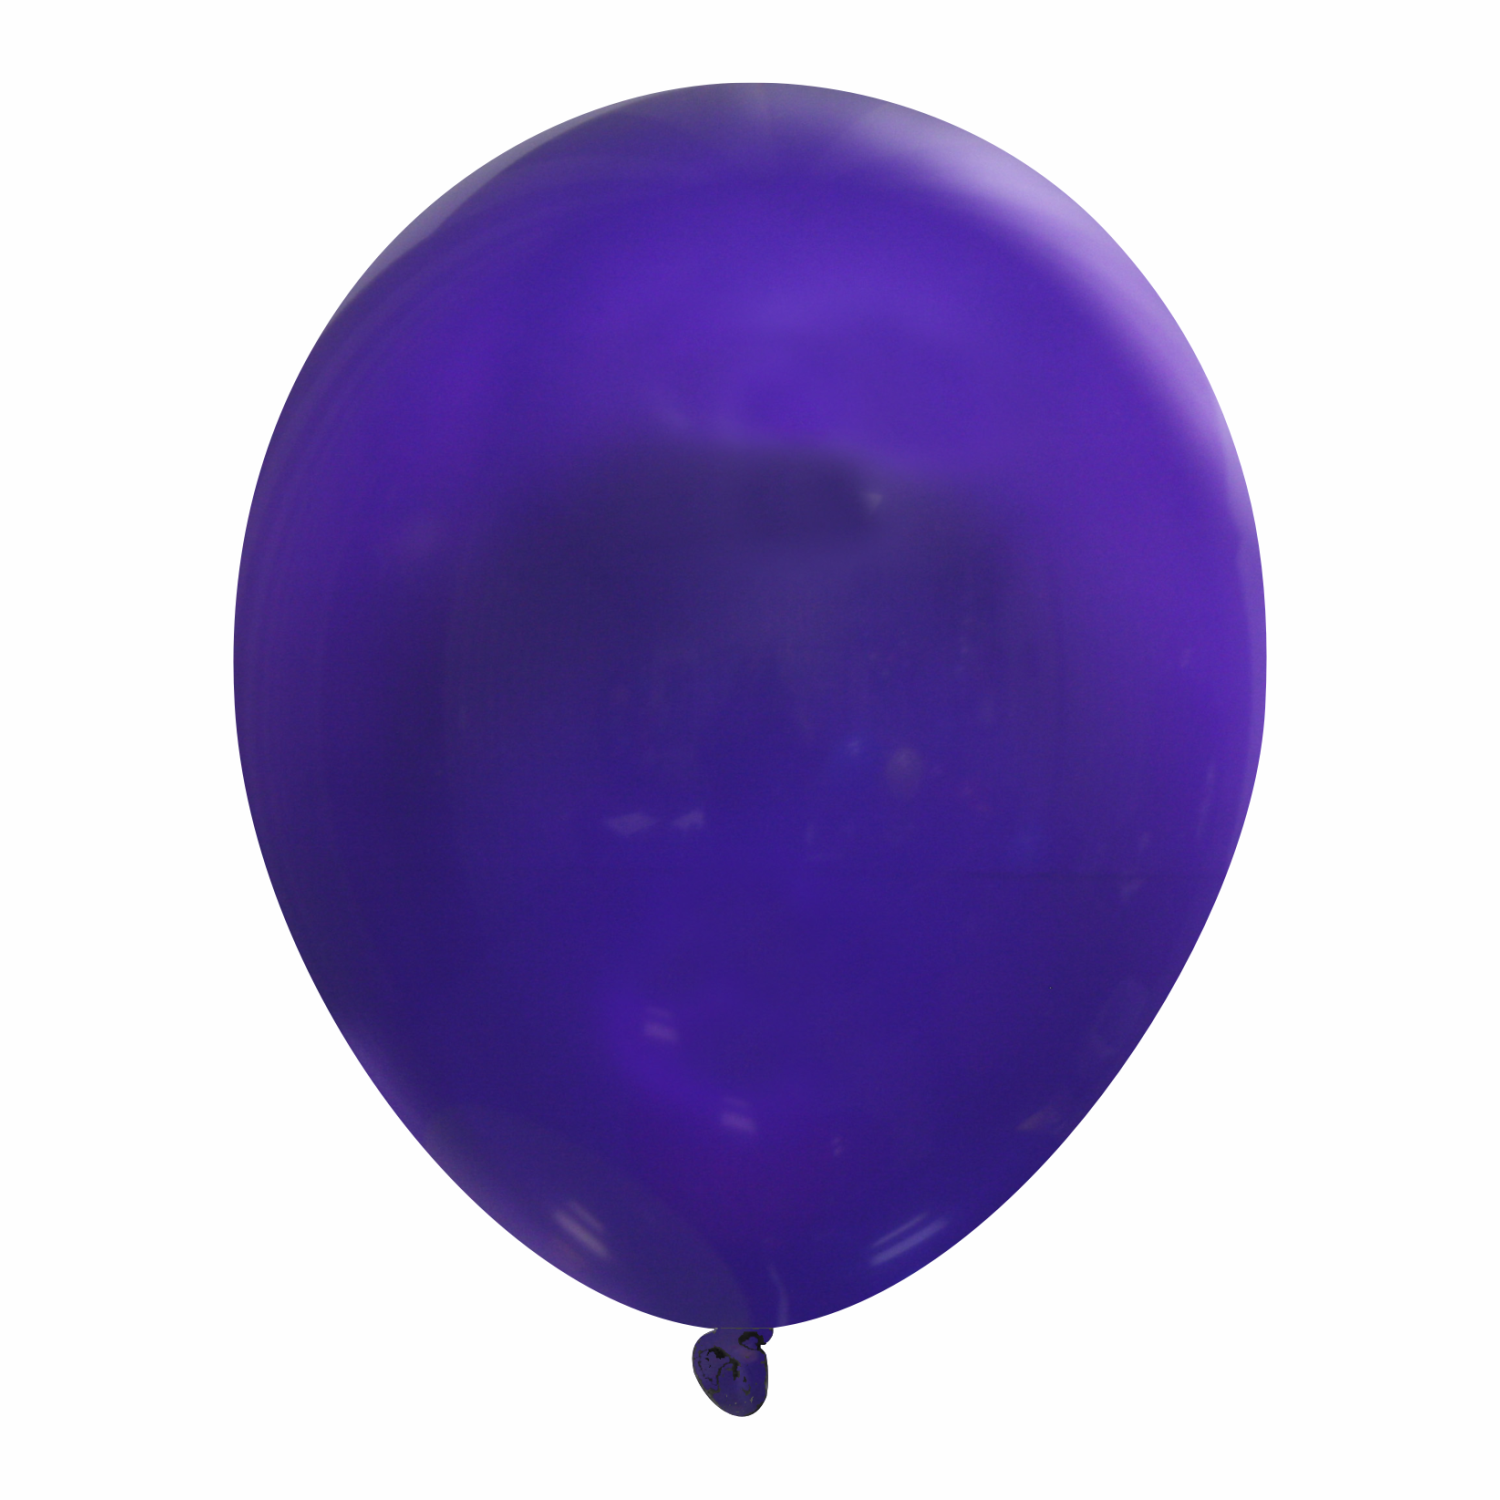 http://images.officebrain.com/migration-api-hidden-new/web/images/626/9crye-deep-purple.png